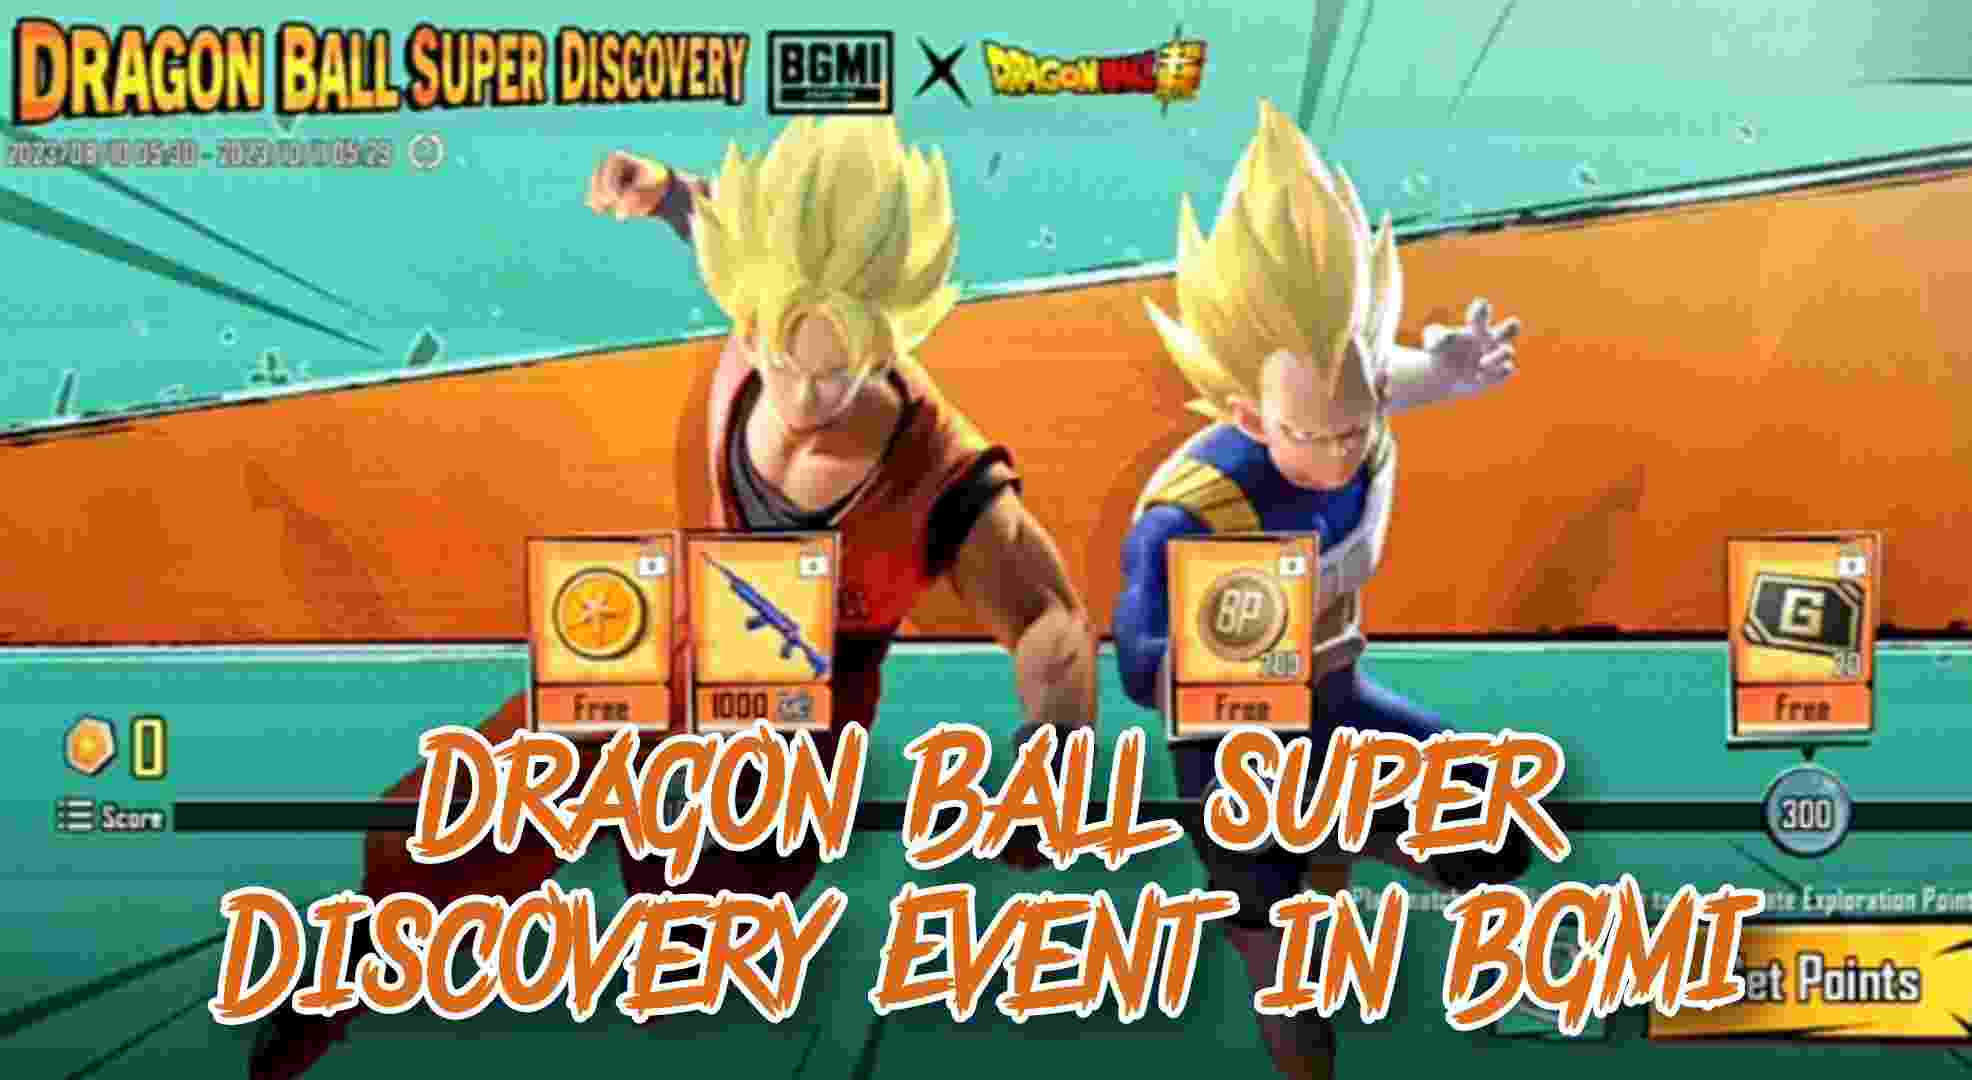 Dragon Ball Super Discovery Event in BGMI - Get Free Rewards